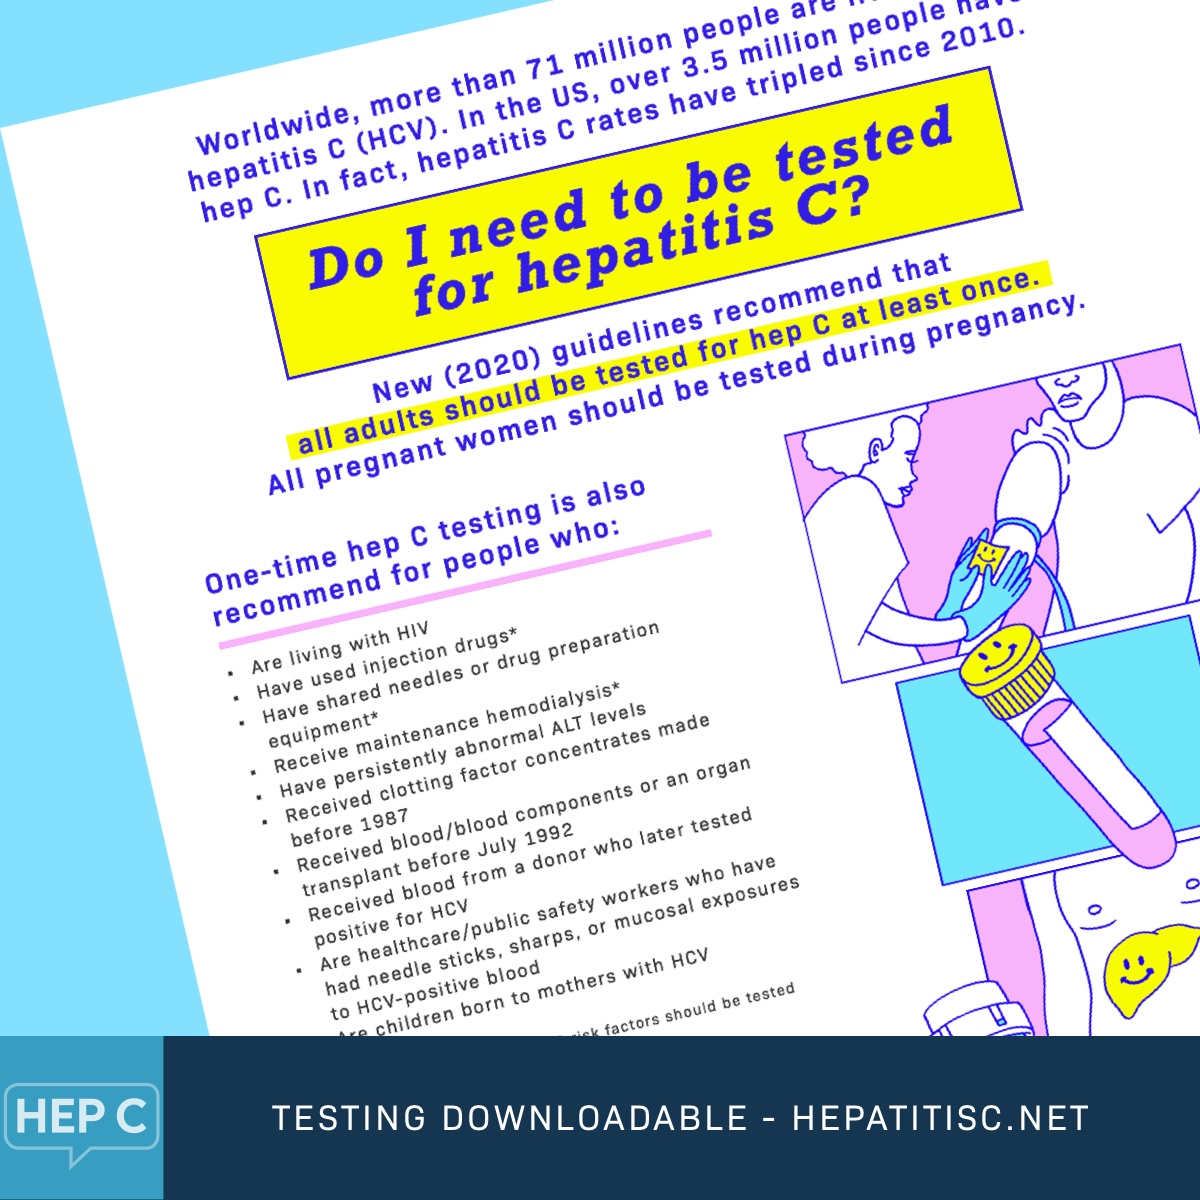 Hep C testing downloadable pdf